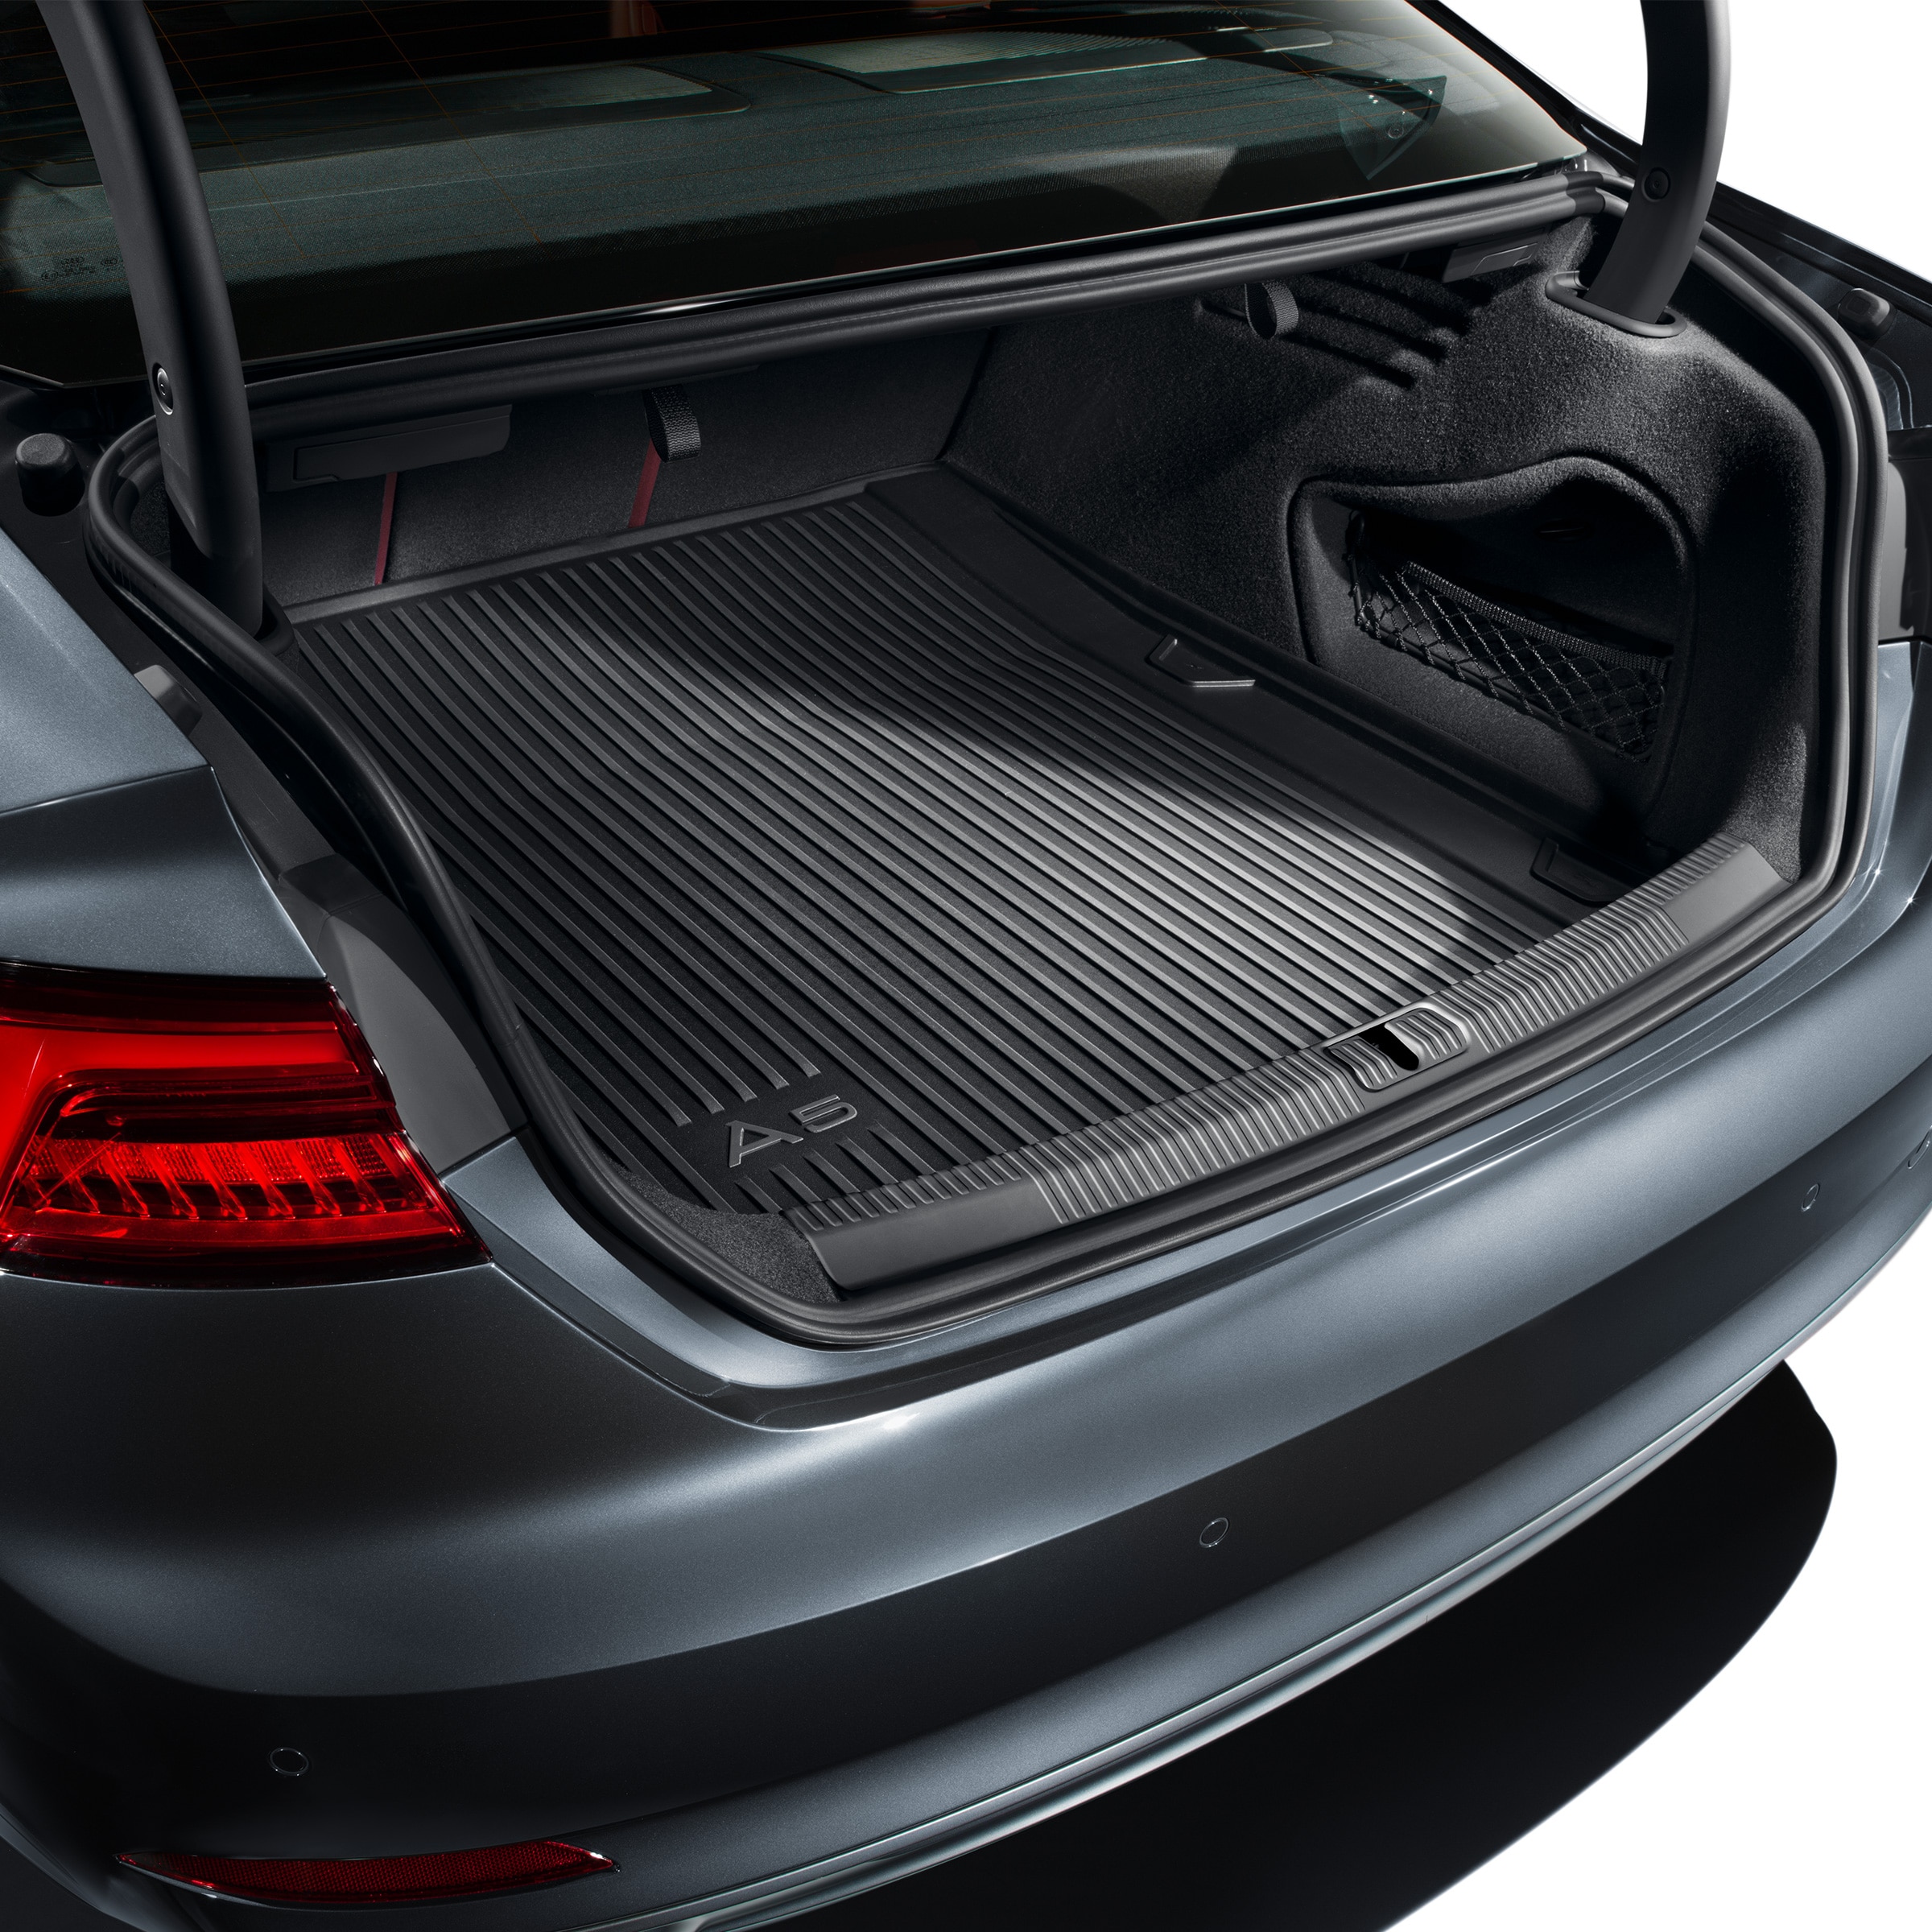 Audi Orig. Zubehör Rückfahrkamera für Audi A5 Coupe+Sportback von